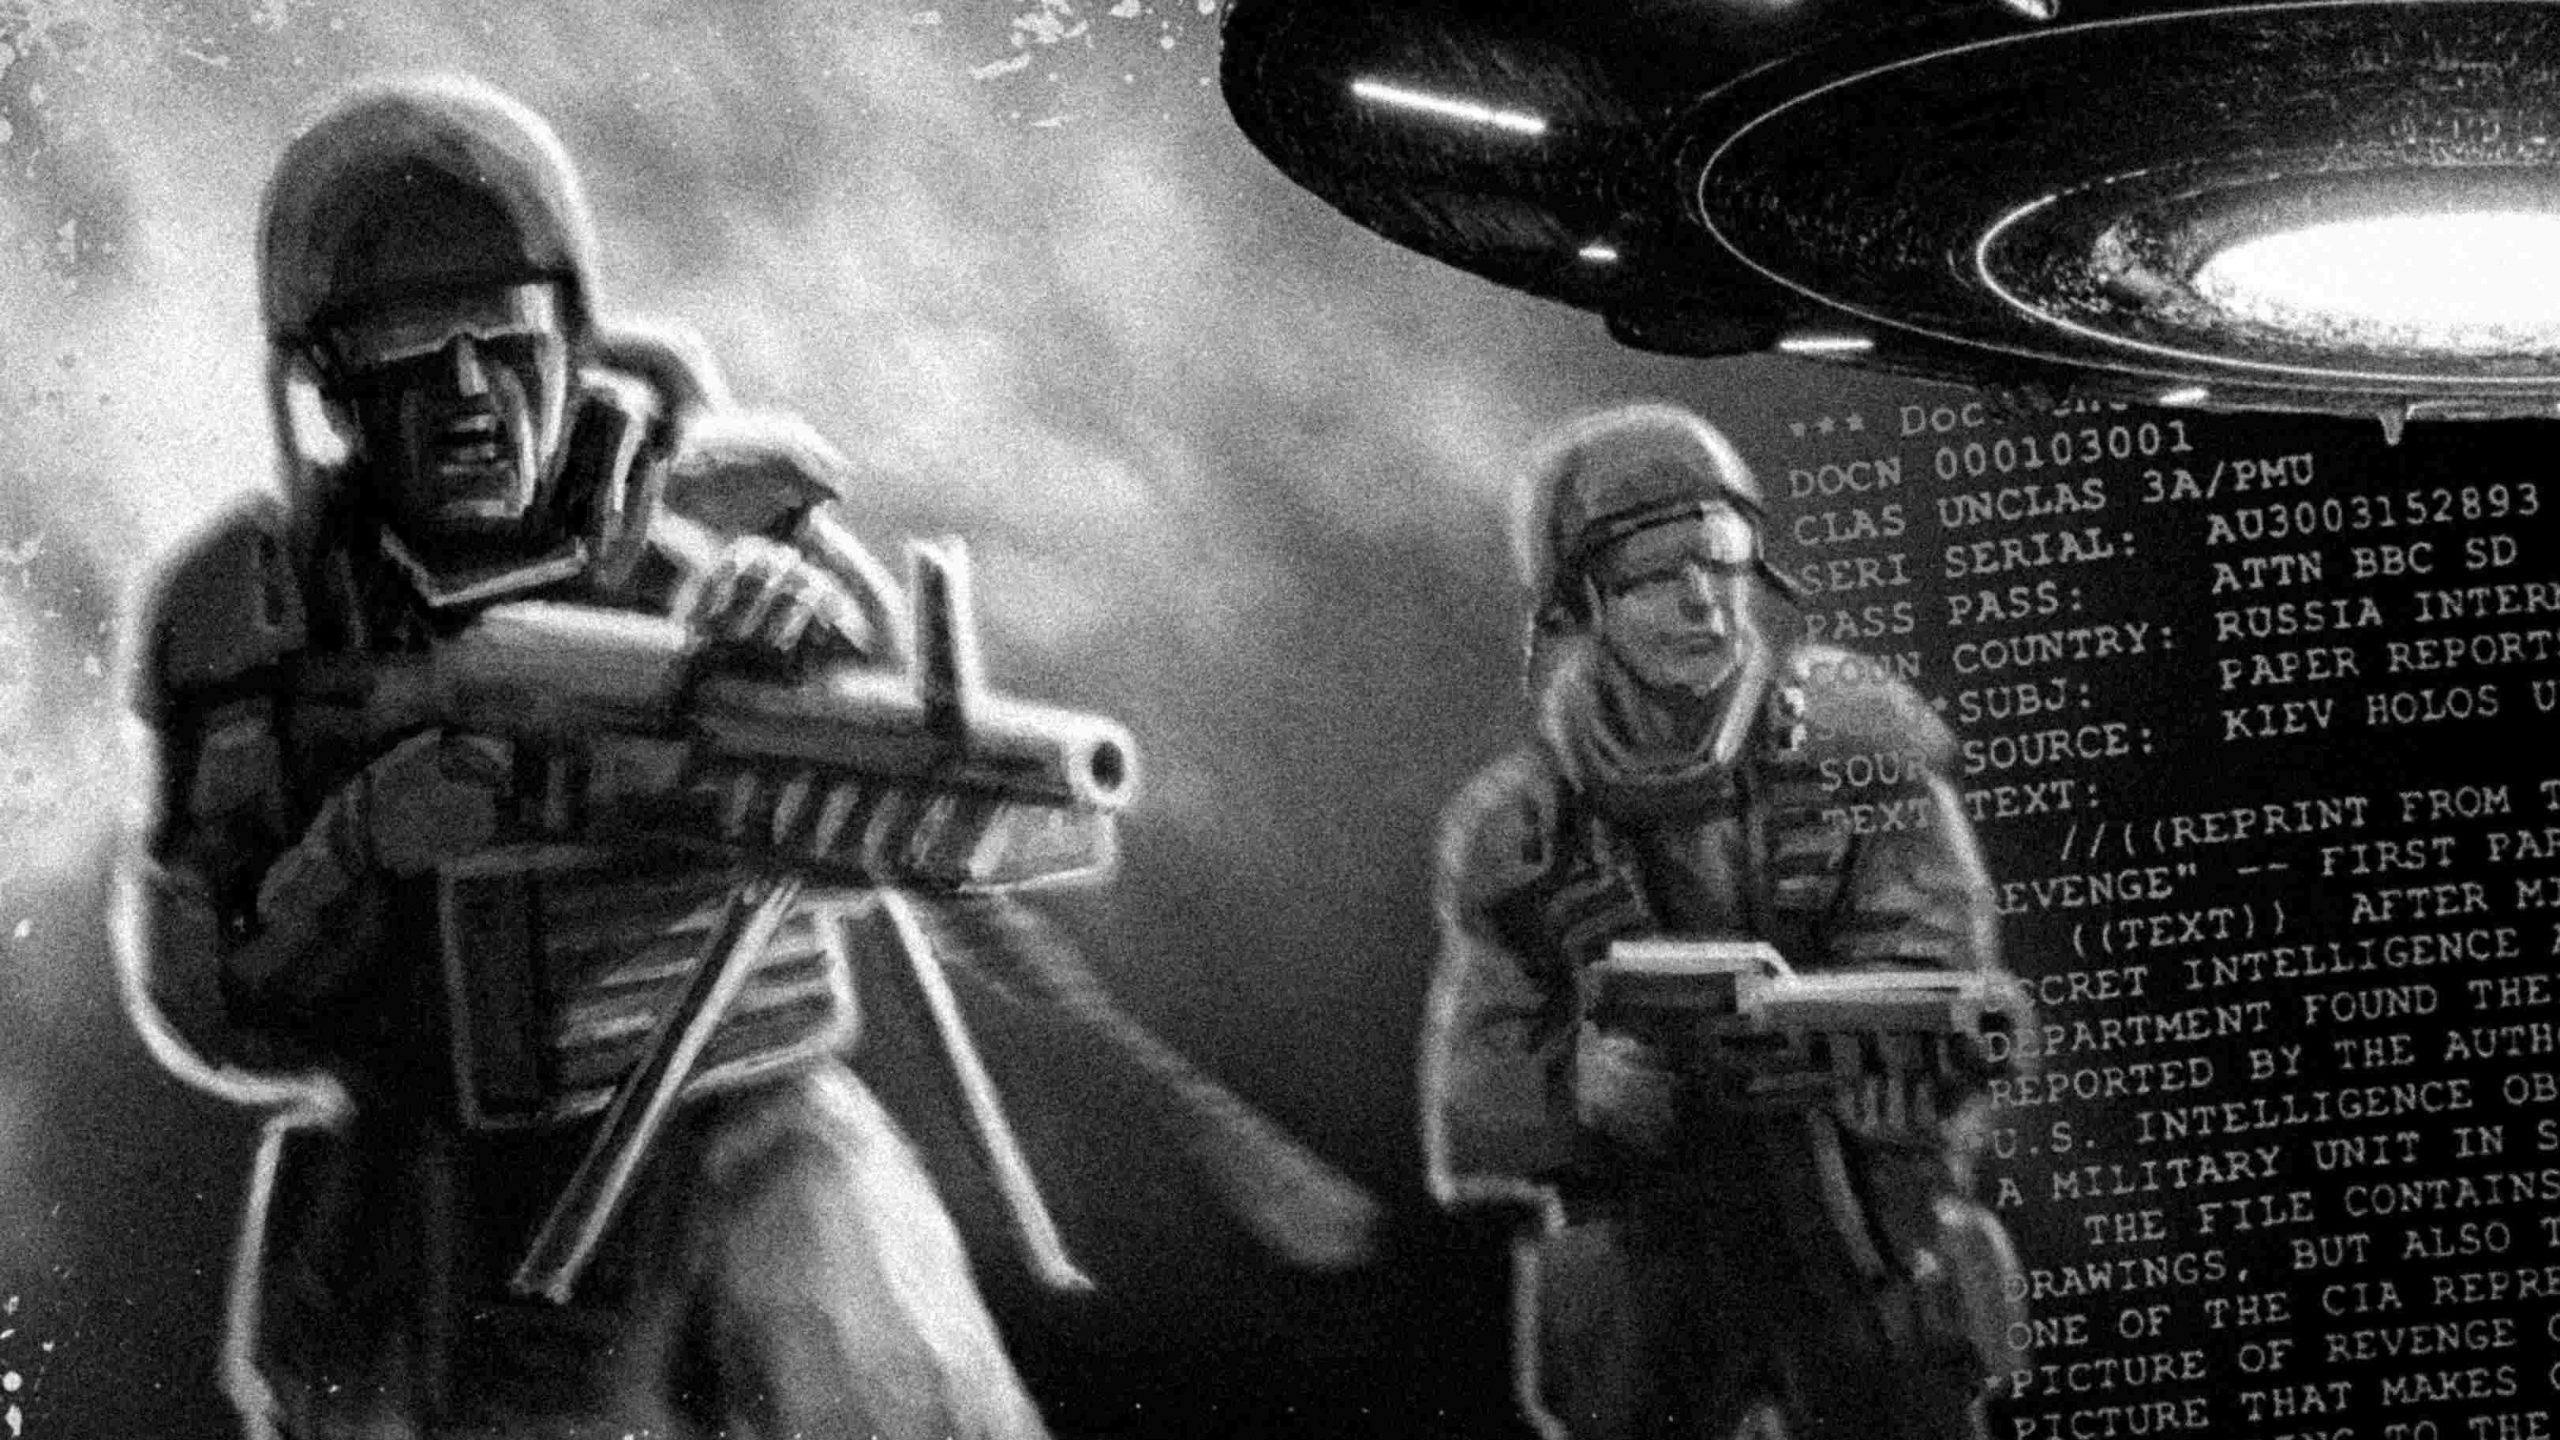 "23 ruskih vojakov je bilo okamenljenih" po napadu nezemljanov - dokument CIA je razkril 1